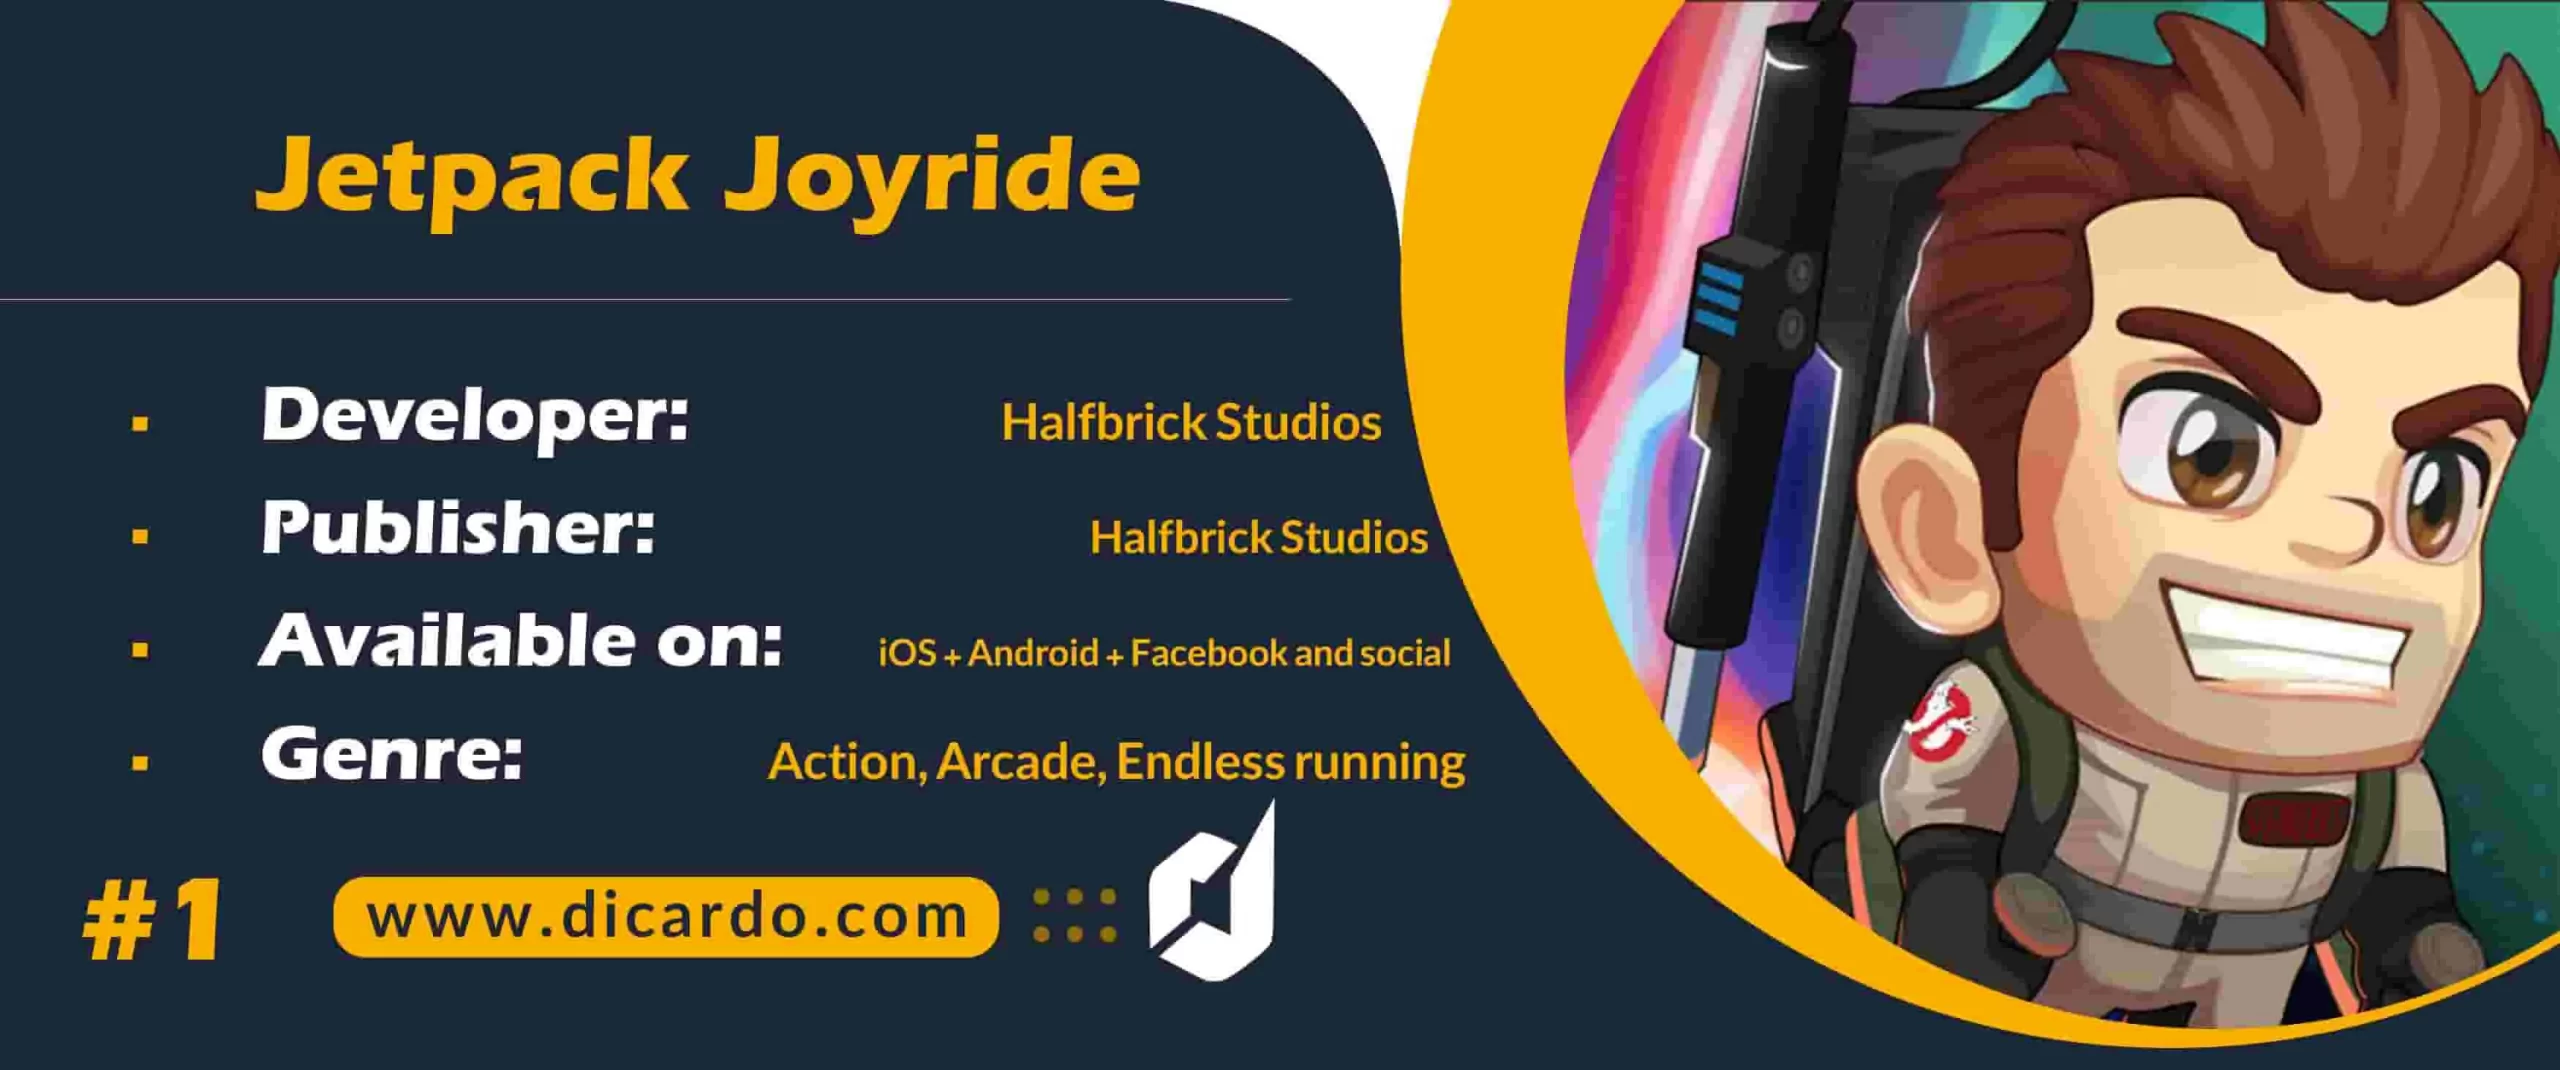 #1 جت پک جویراد Jetpack Joyride (previously Machine Gun Jetpack)